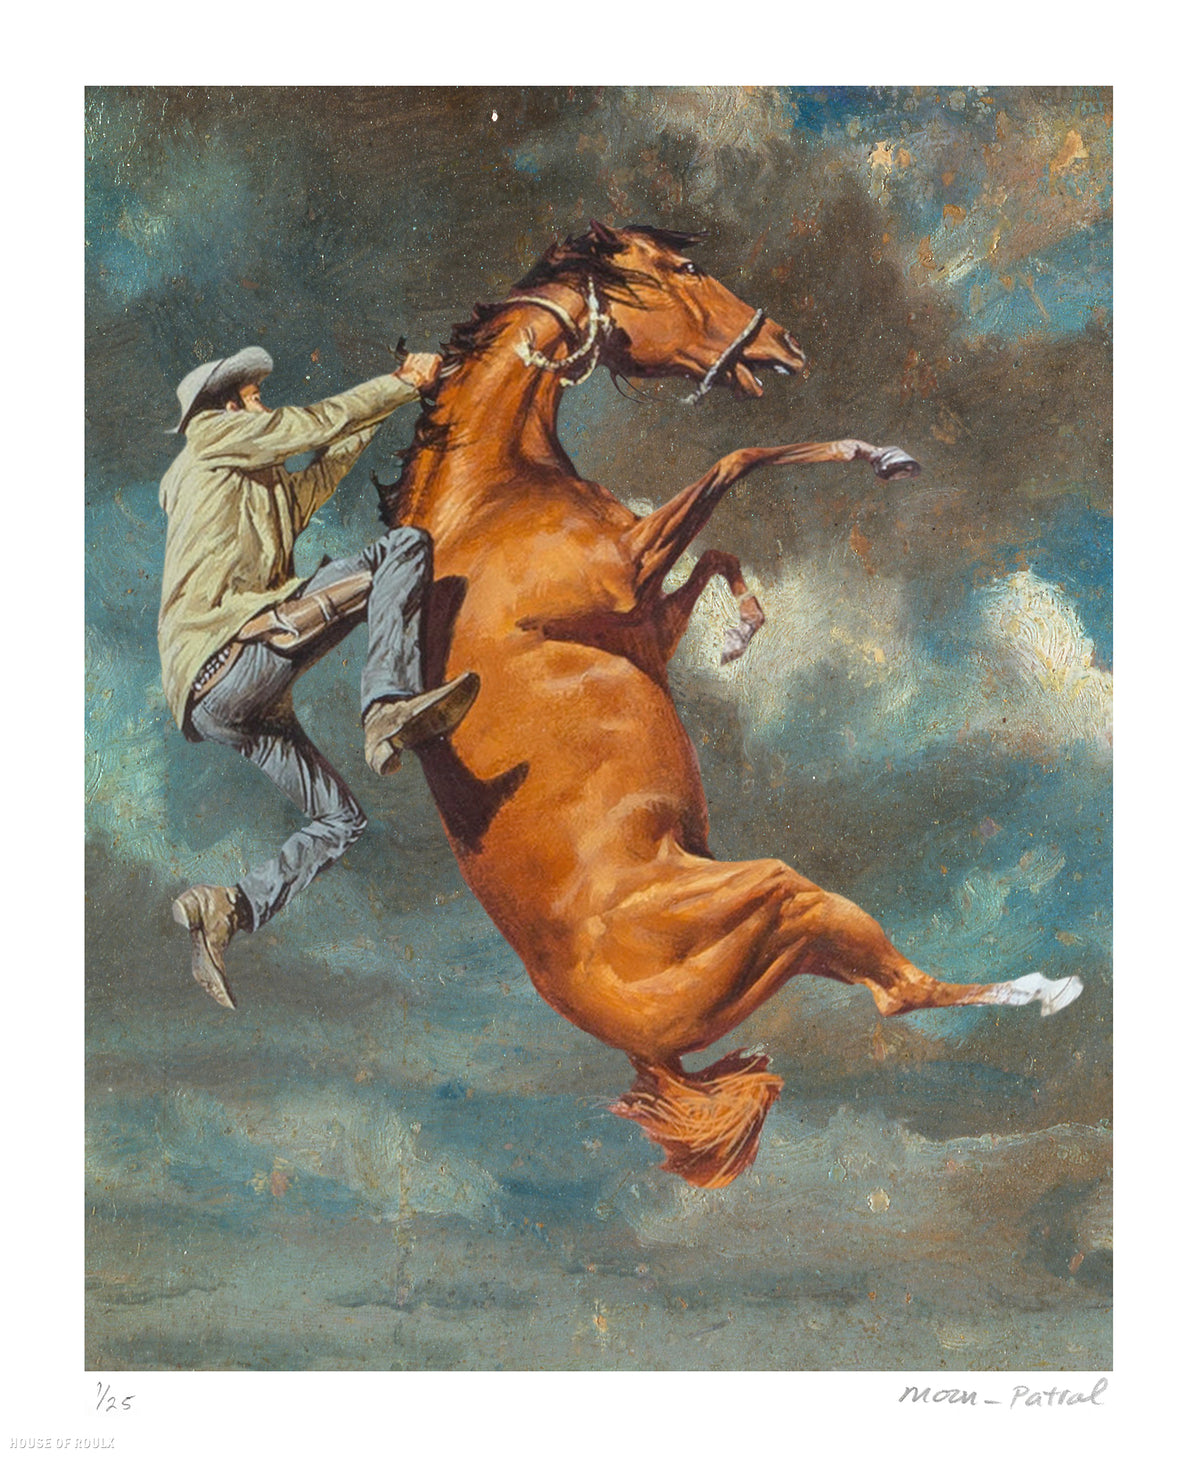 Moon Patrol &quot;Falling Cowboy&quot; - Archival Print, Limited Edition of 25 - 14 x 17&quot;